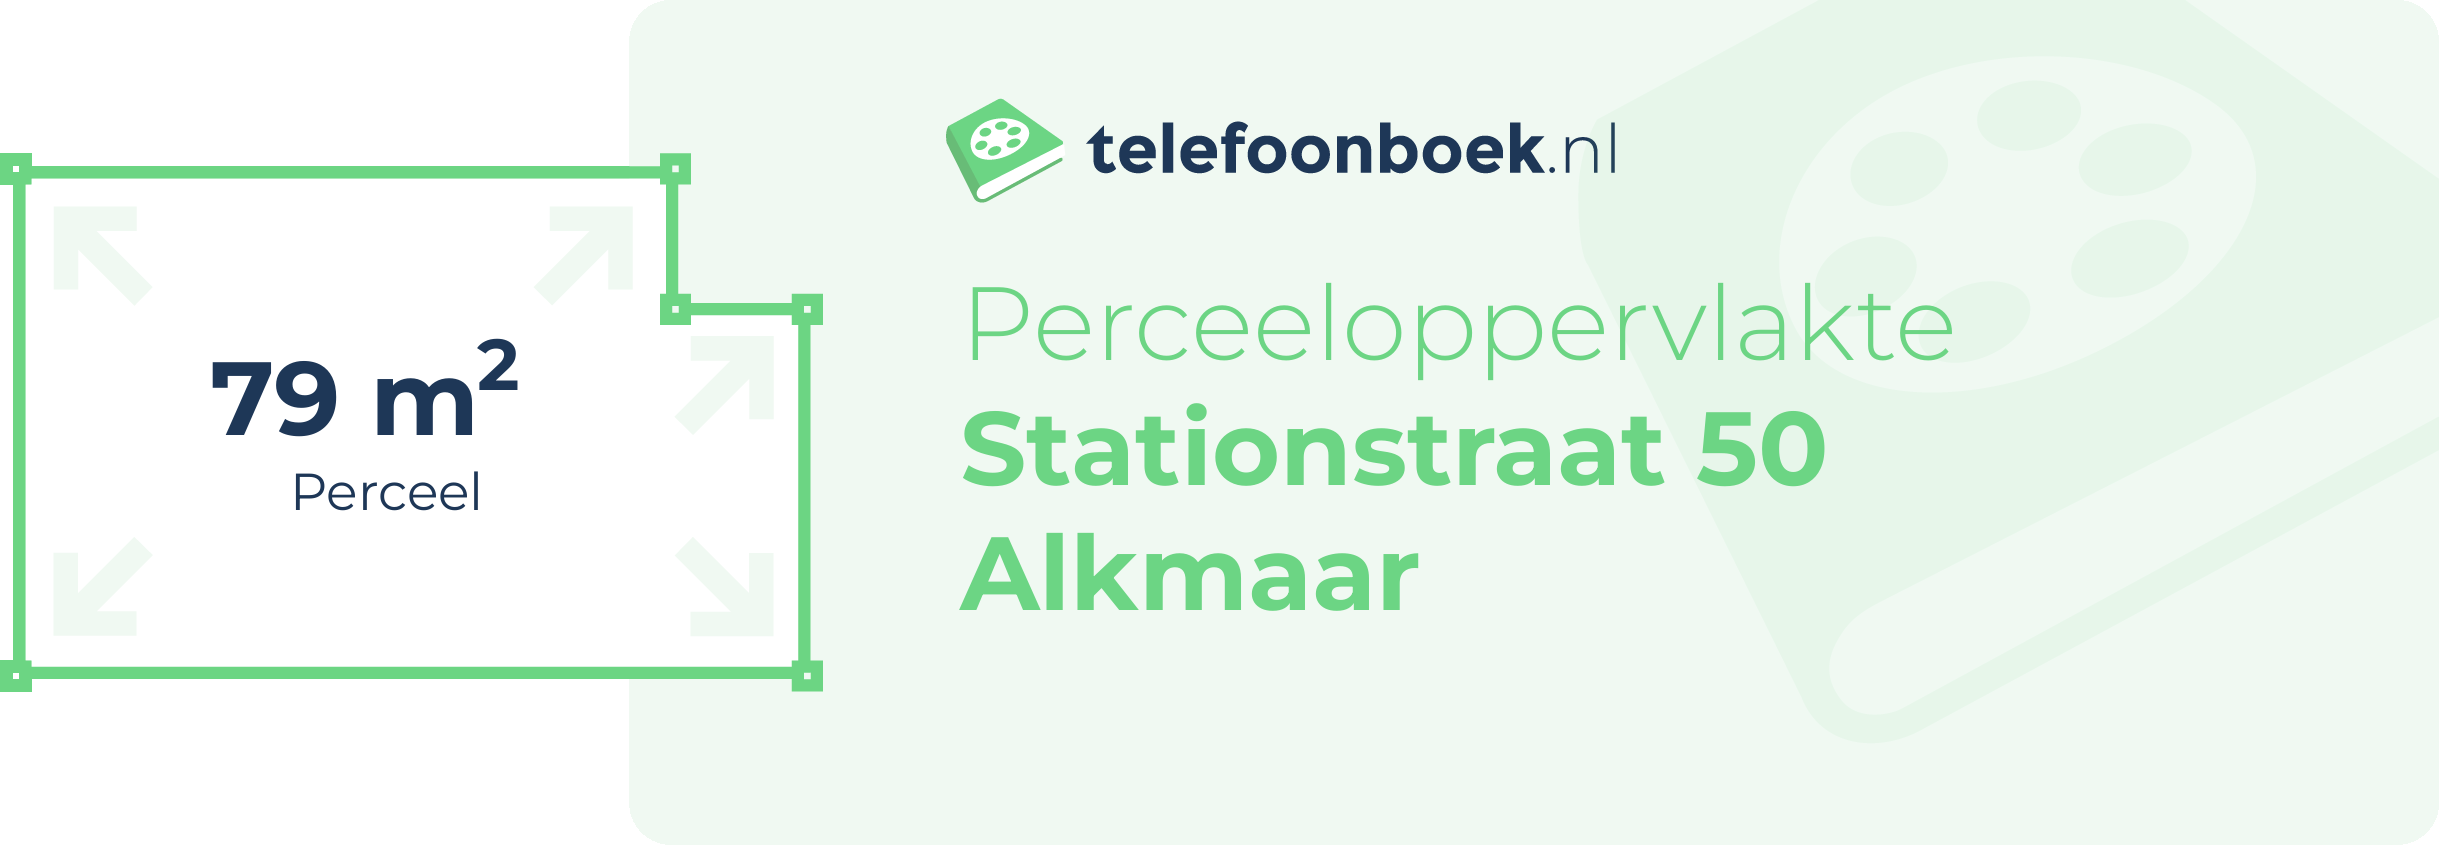 Perceeloppervlakte Stationstraat 50 Alkmaar